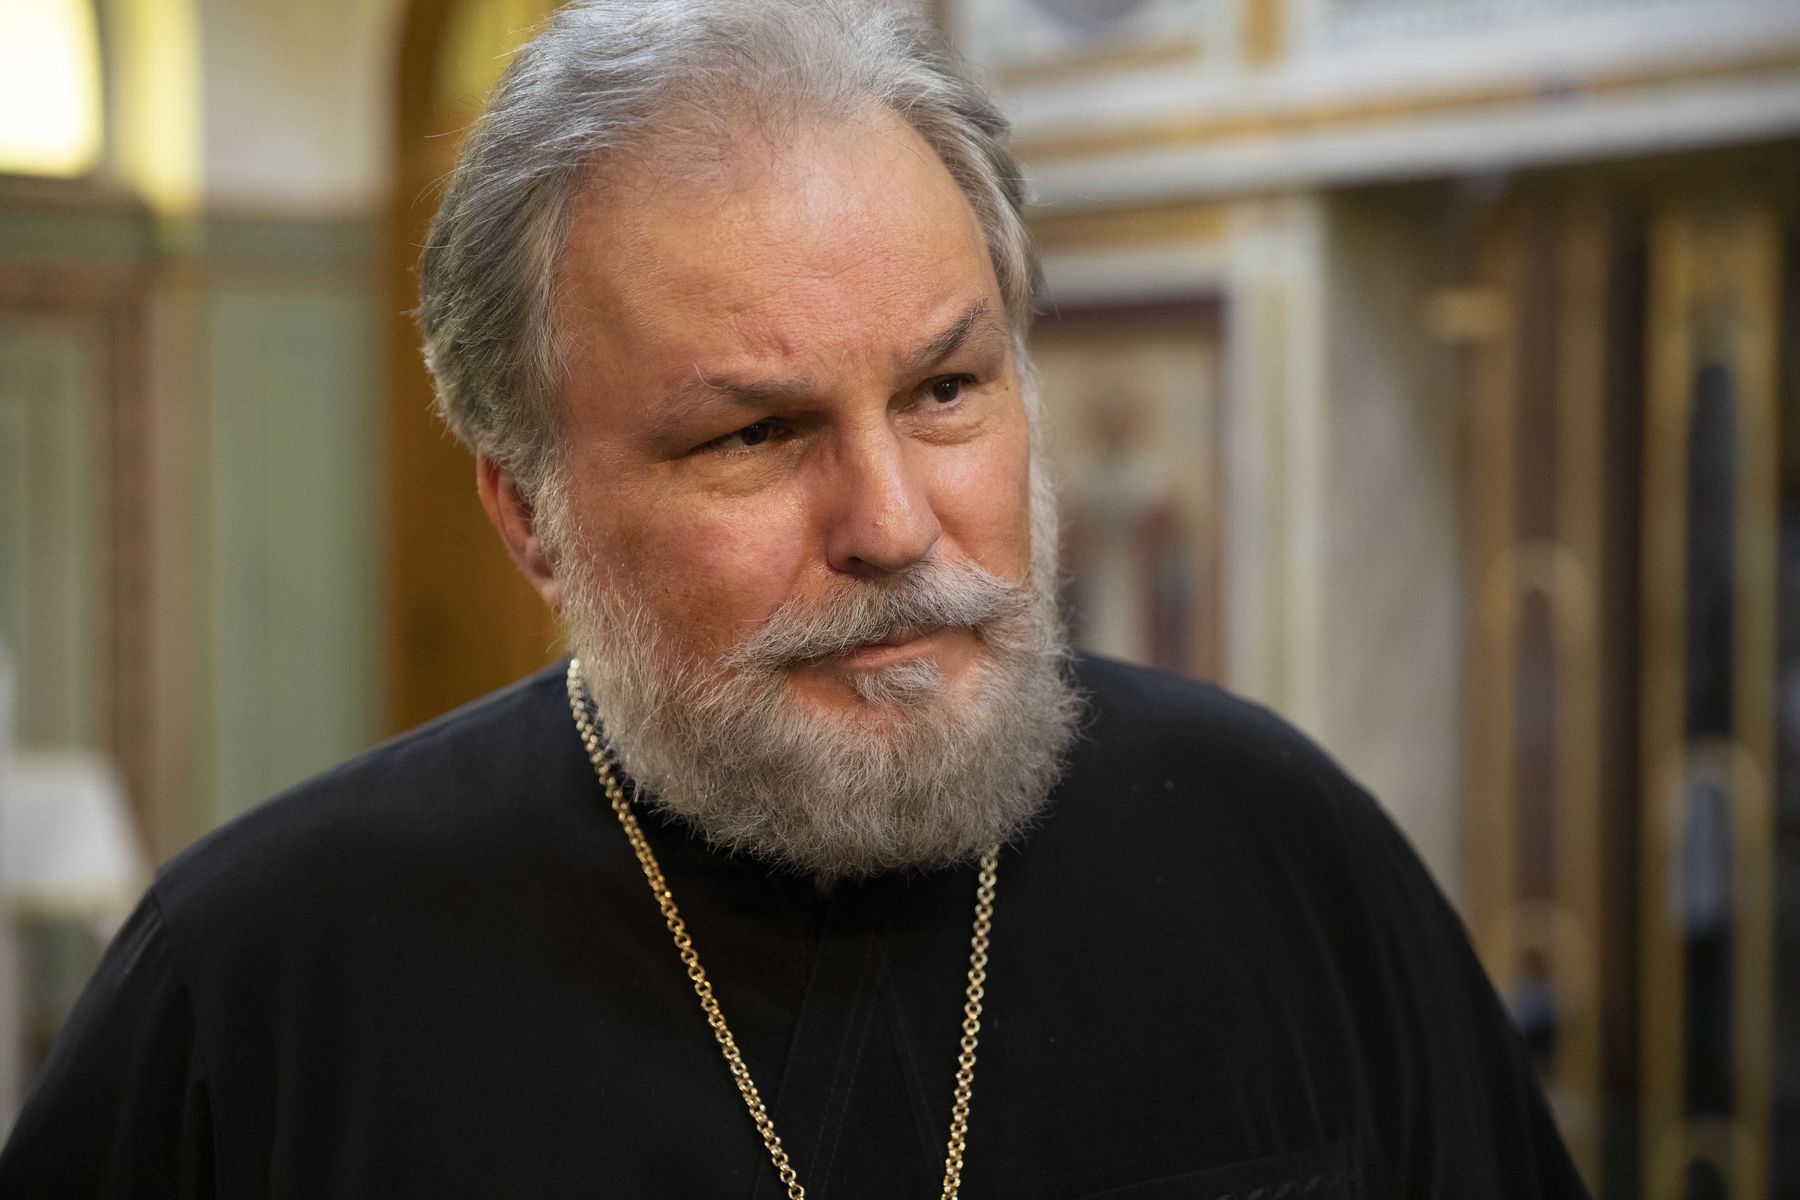 Episcopal Ordination of Father Mykhailo Kvyatkovsky to take place in Winnipeg